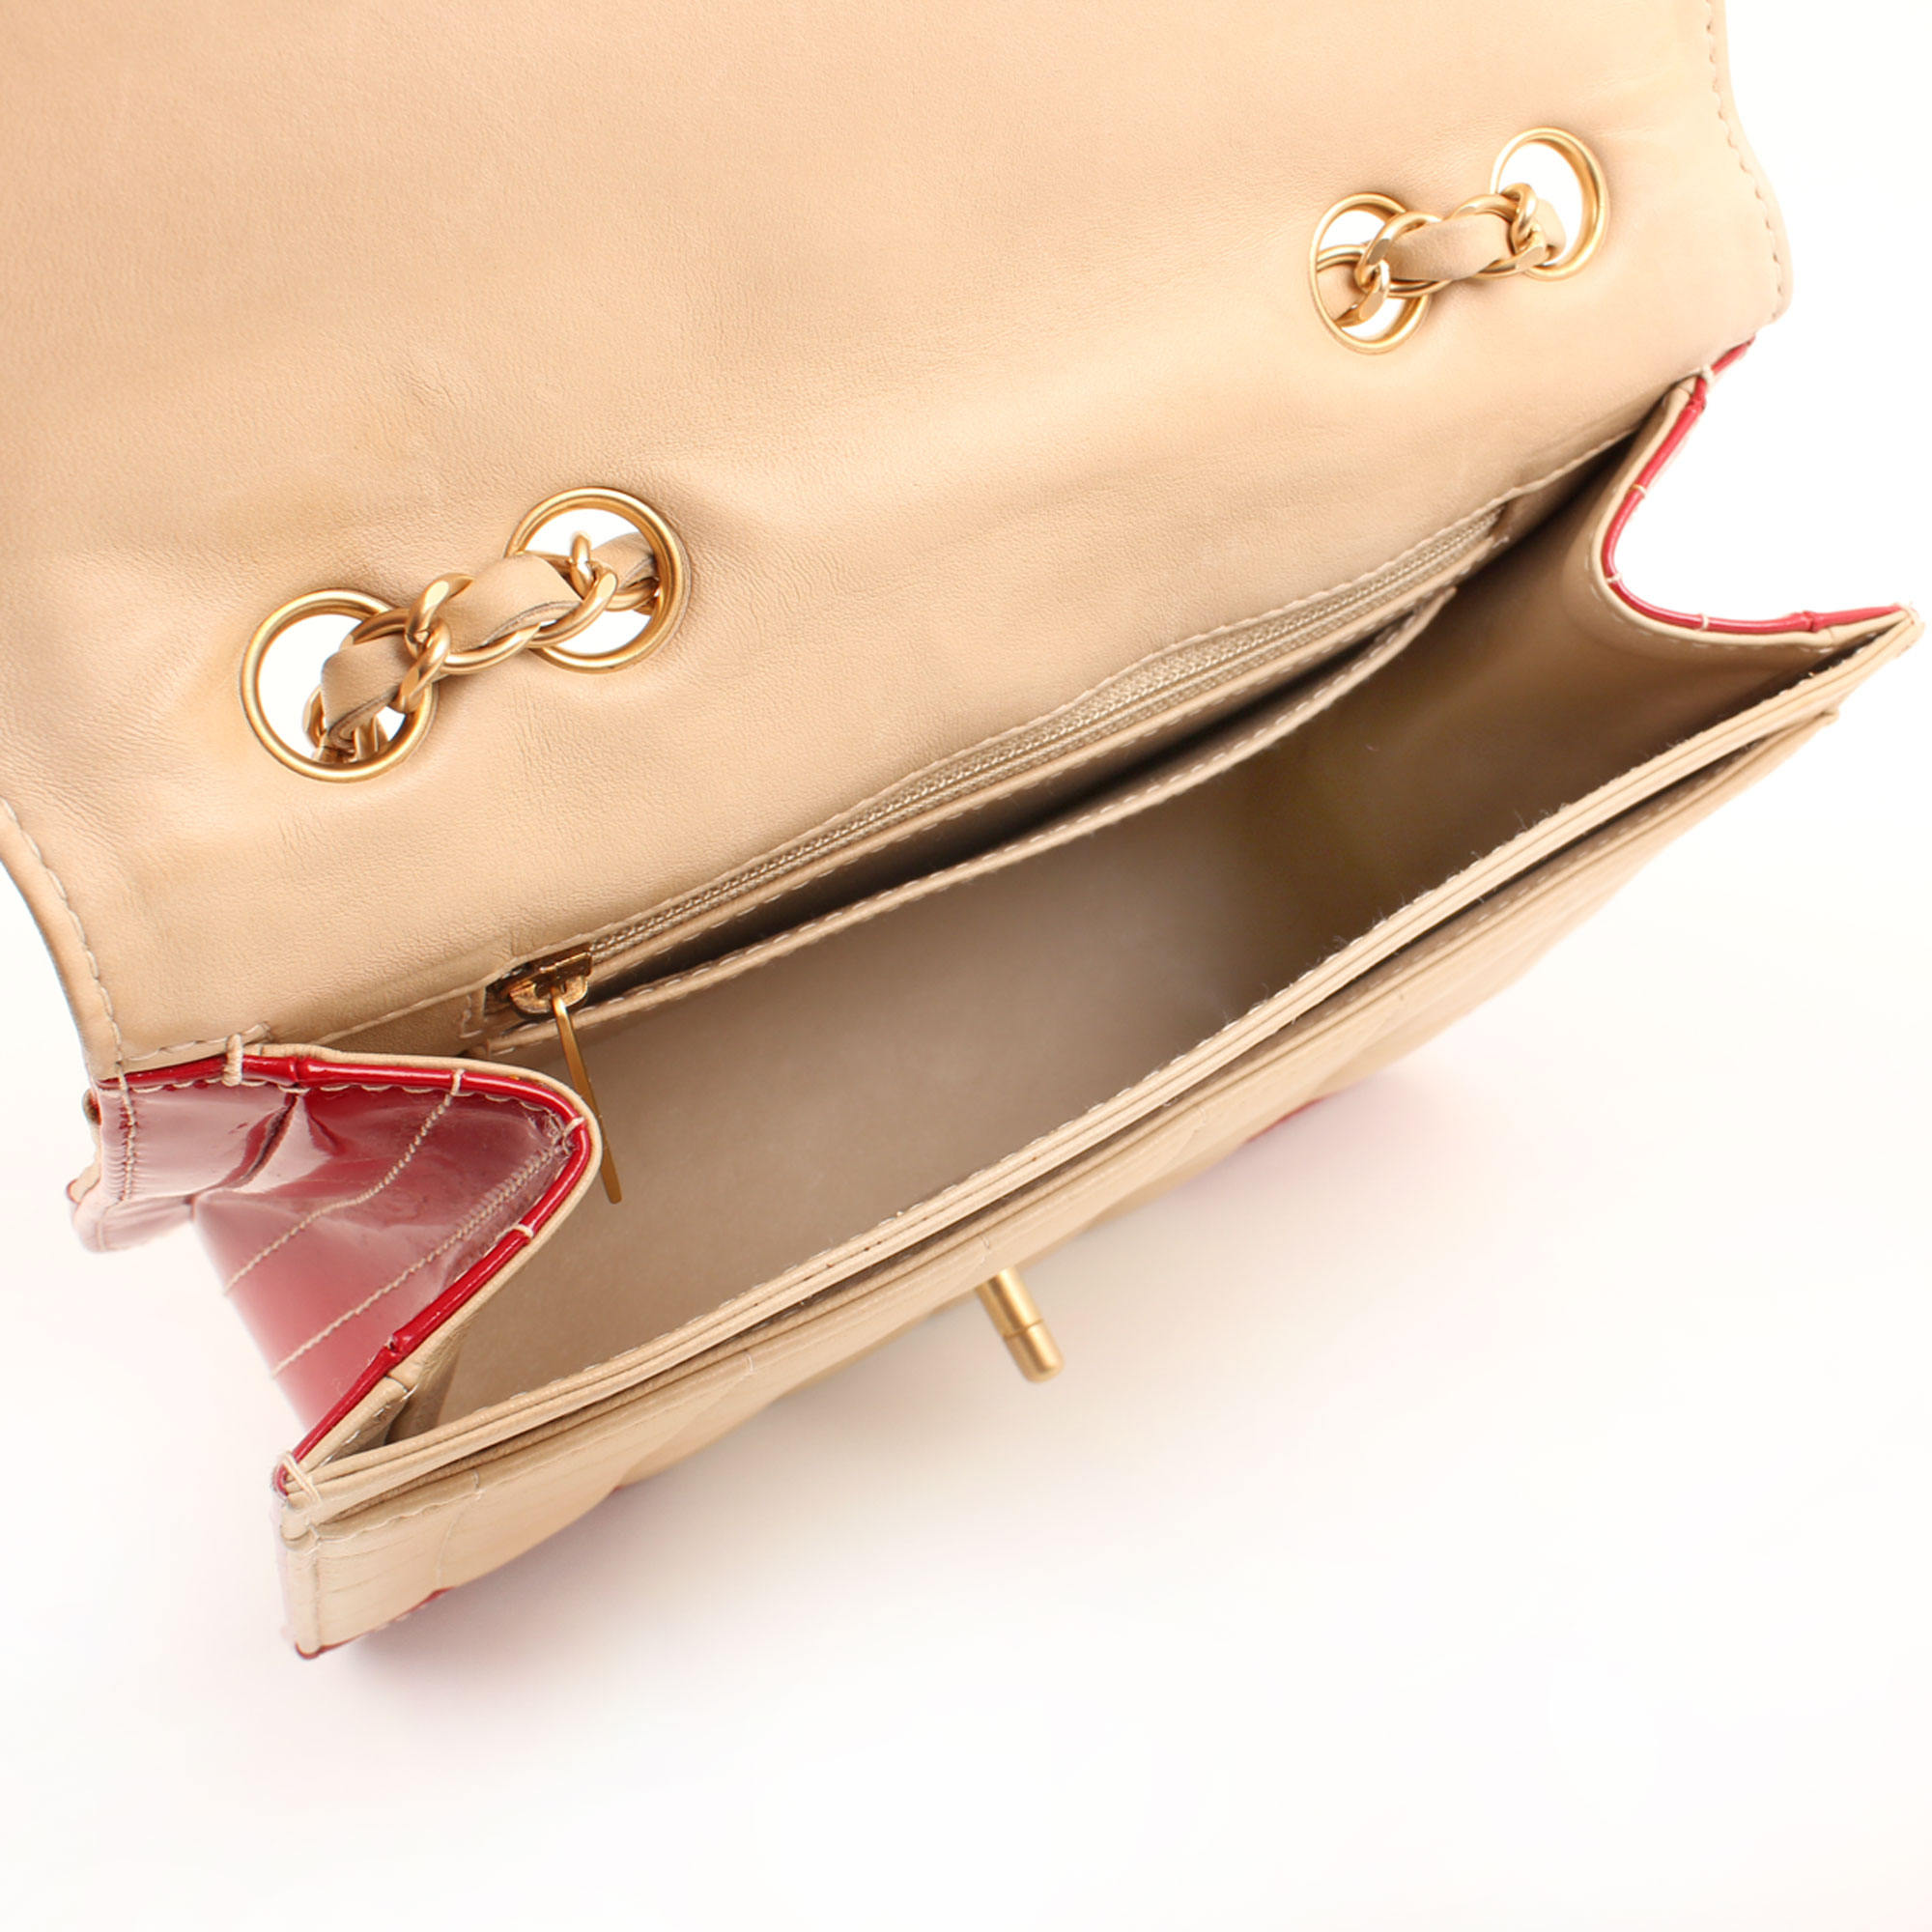 Imagen del interior del bolso chanel bicolor choco bar solapa unica